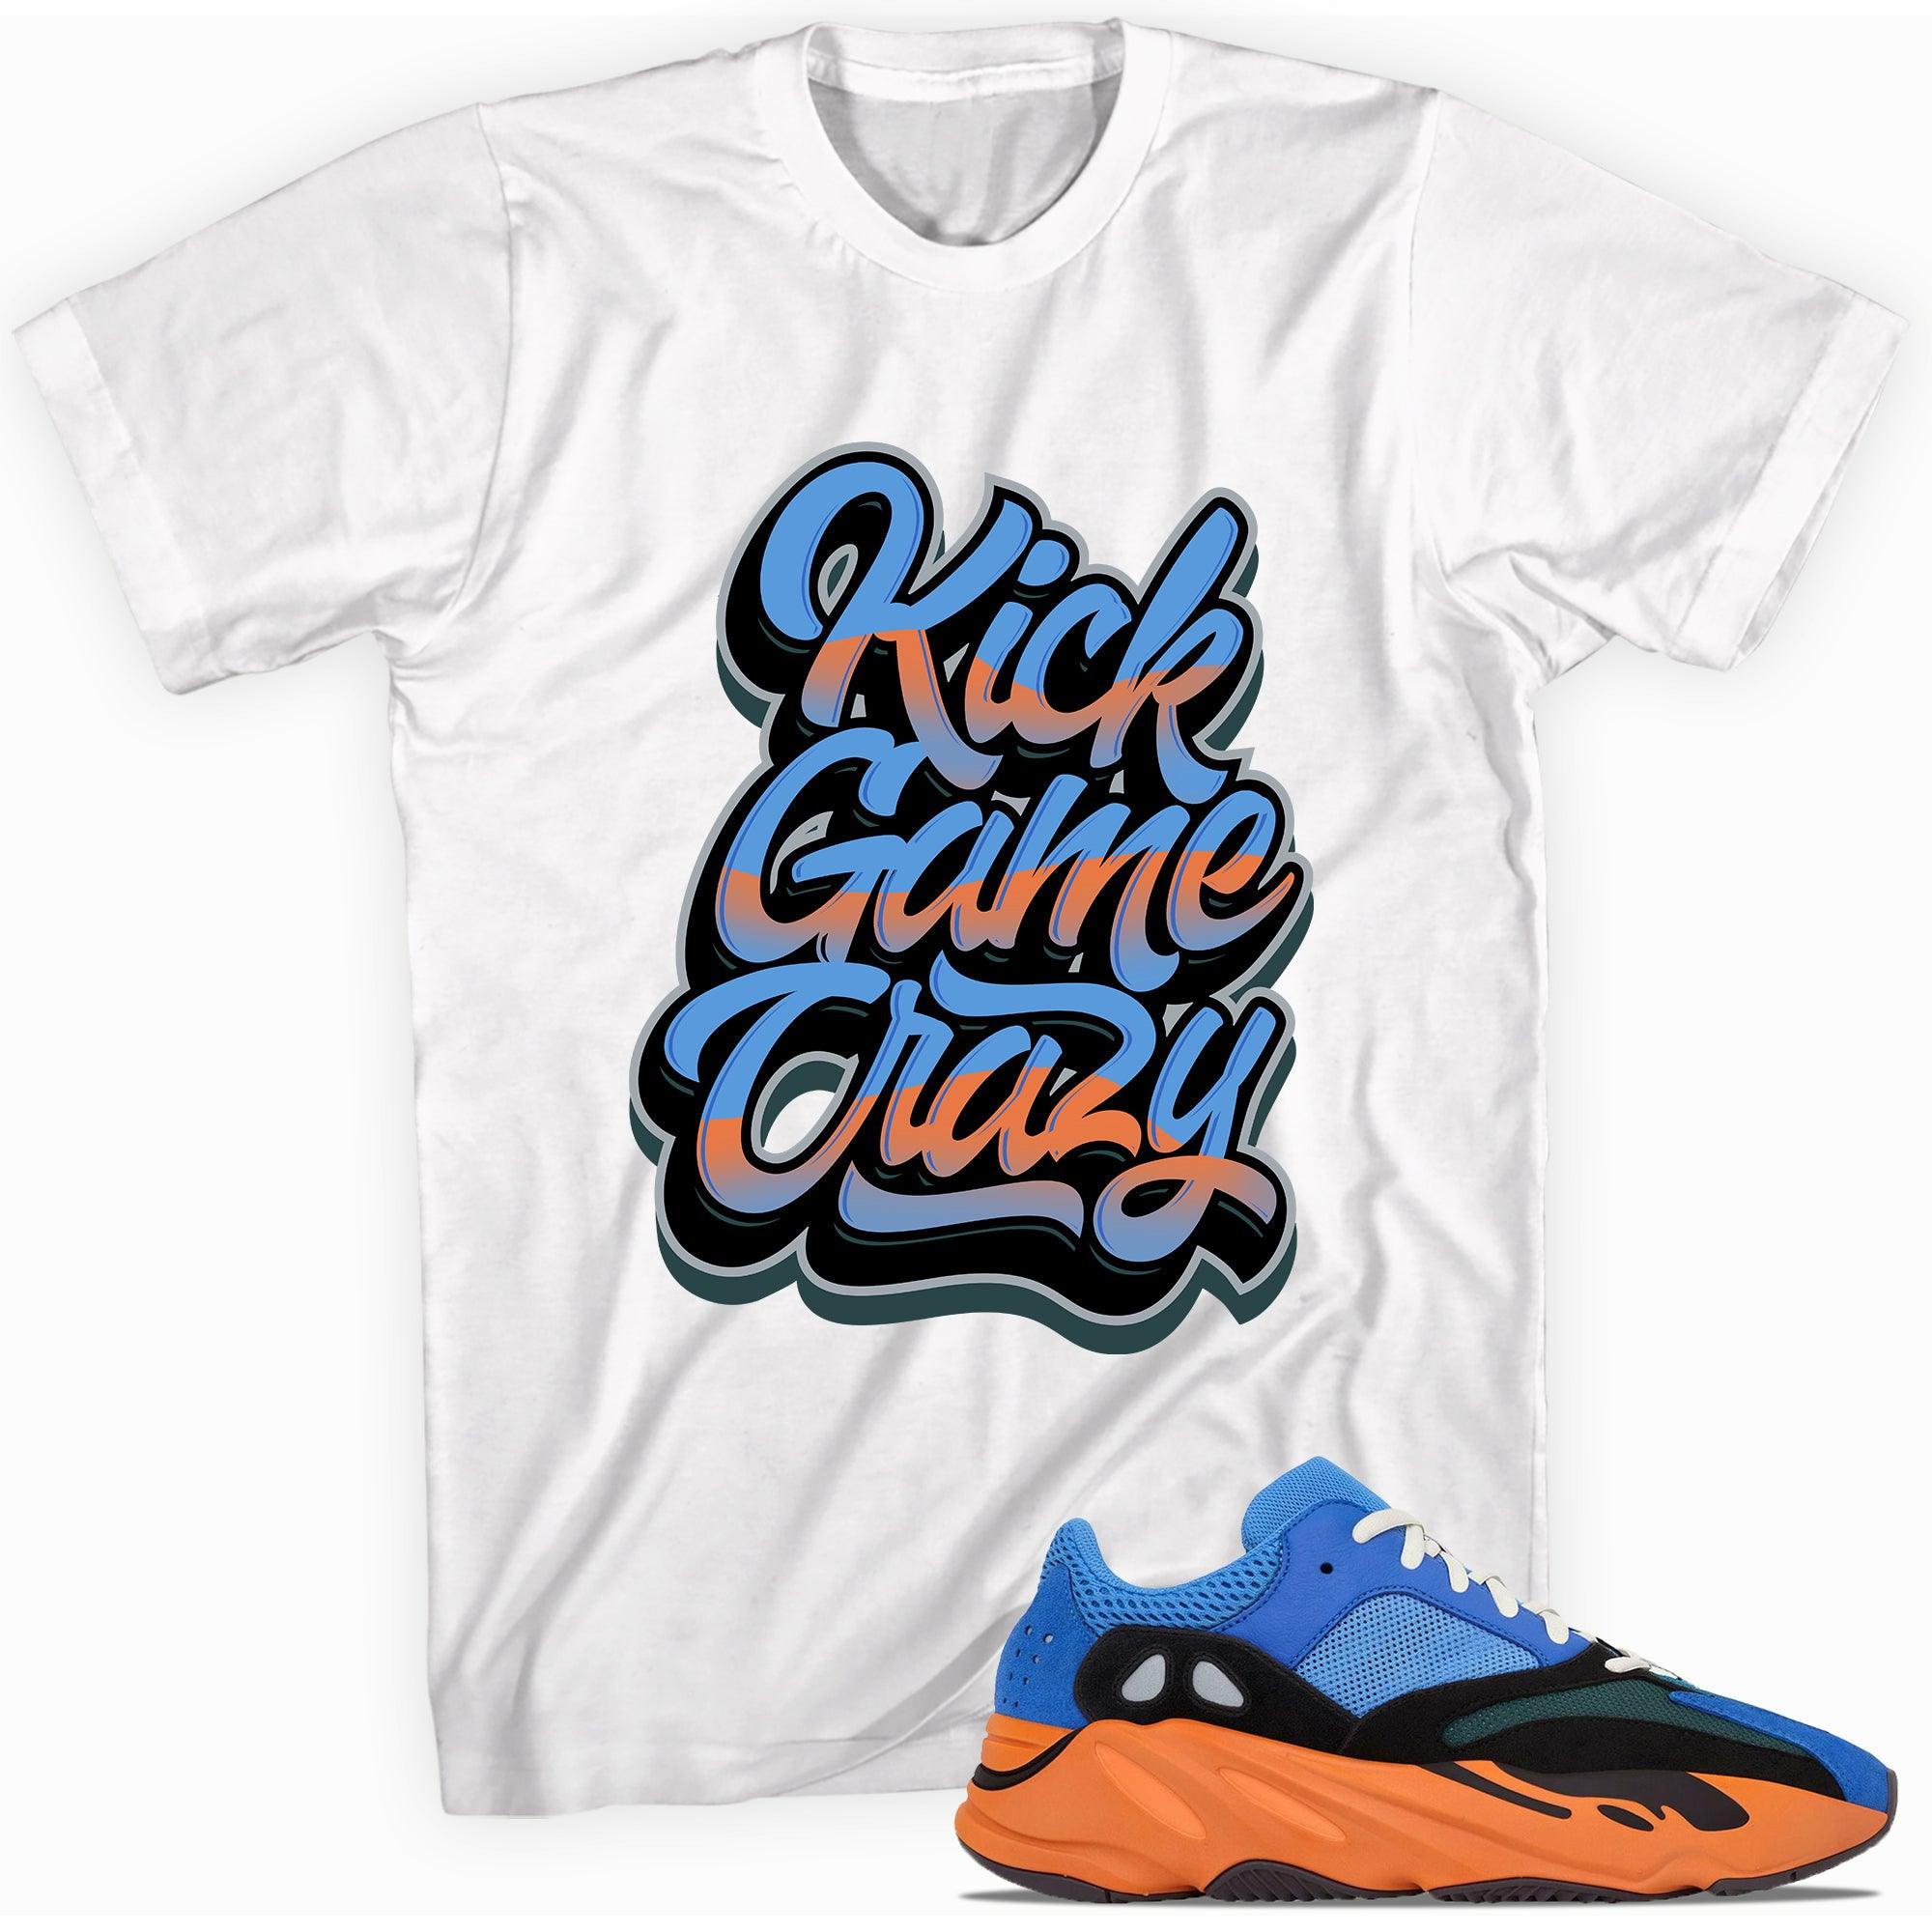 Kick Game Crazy Shirt Yeezy Boost 700s Bright Blue photo